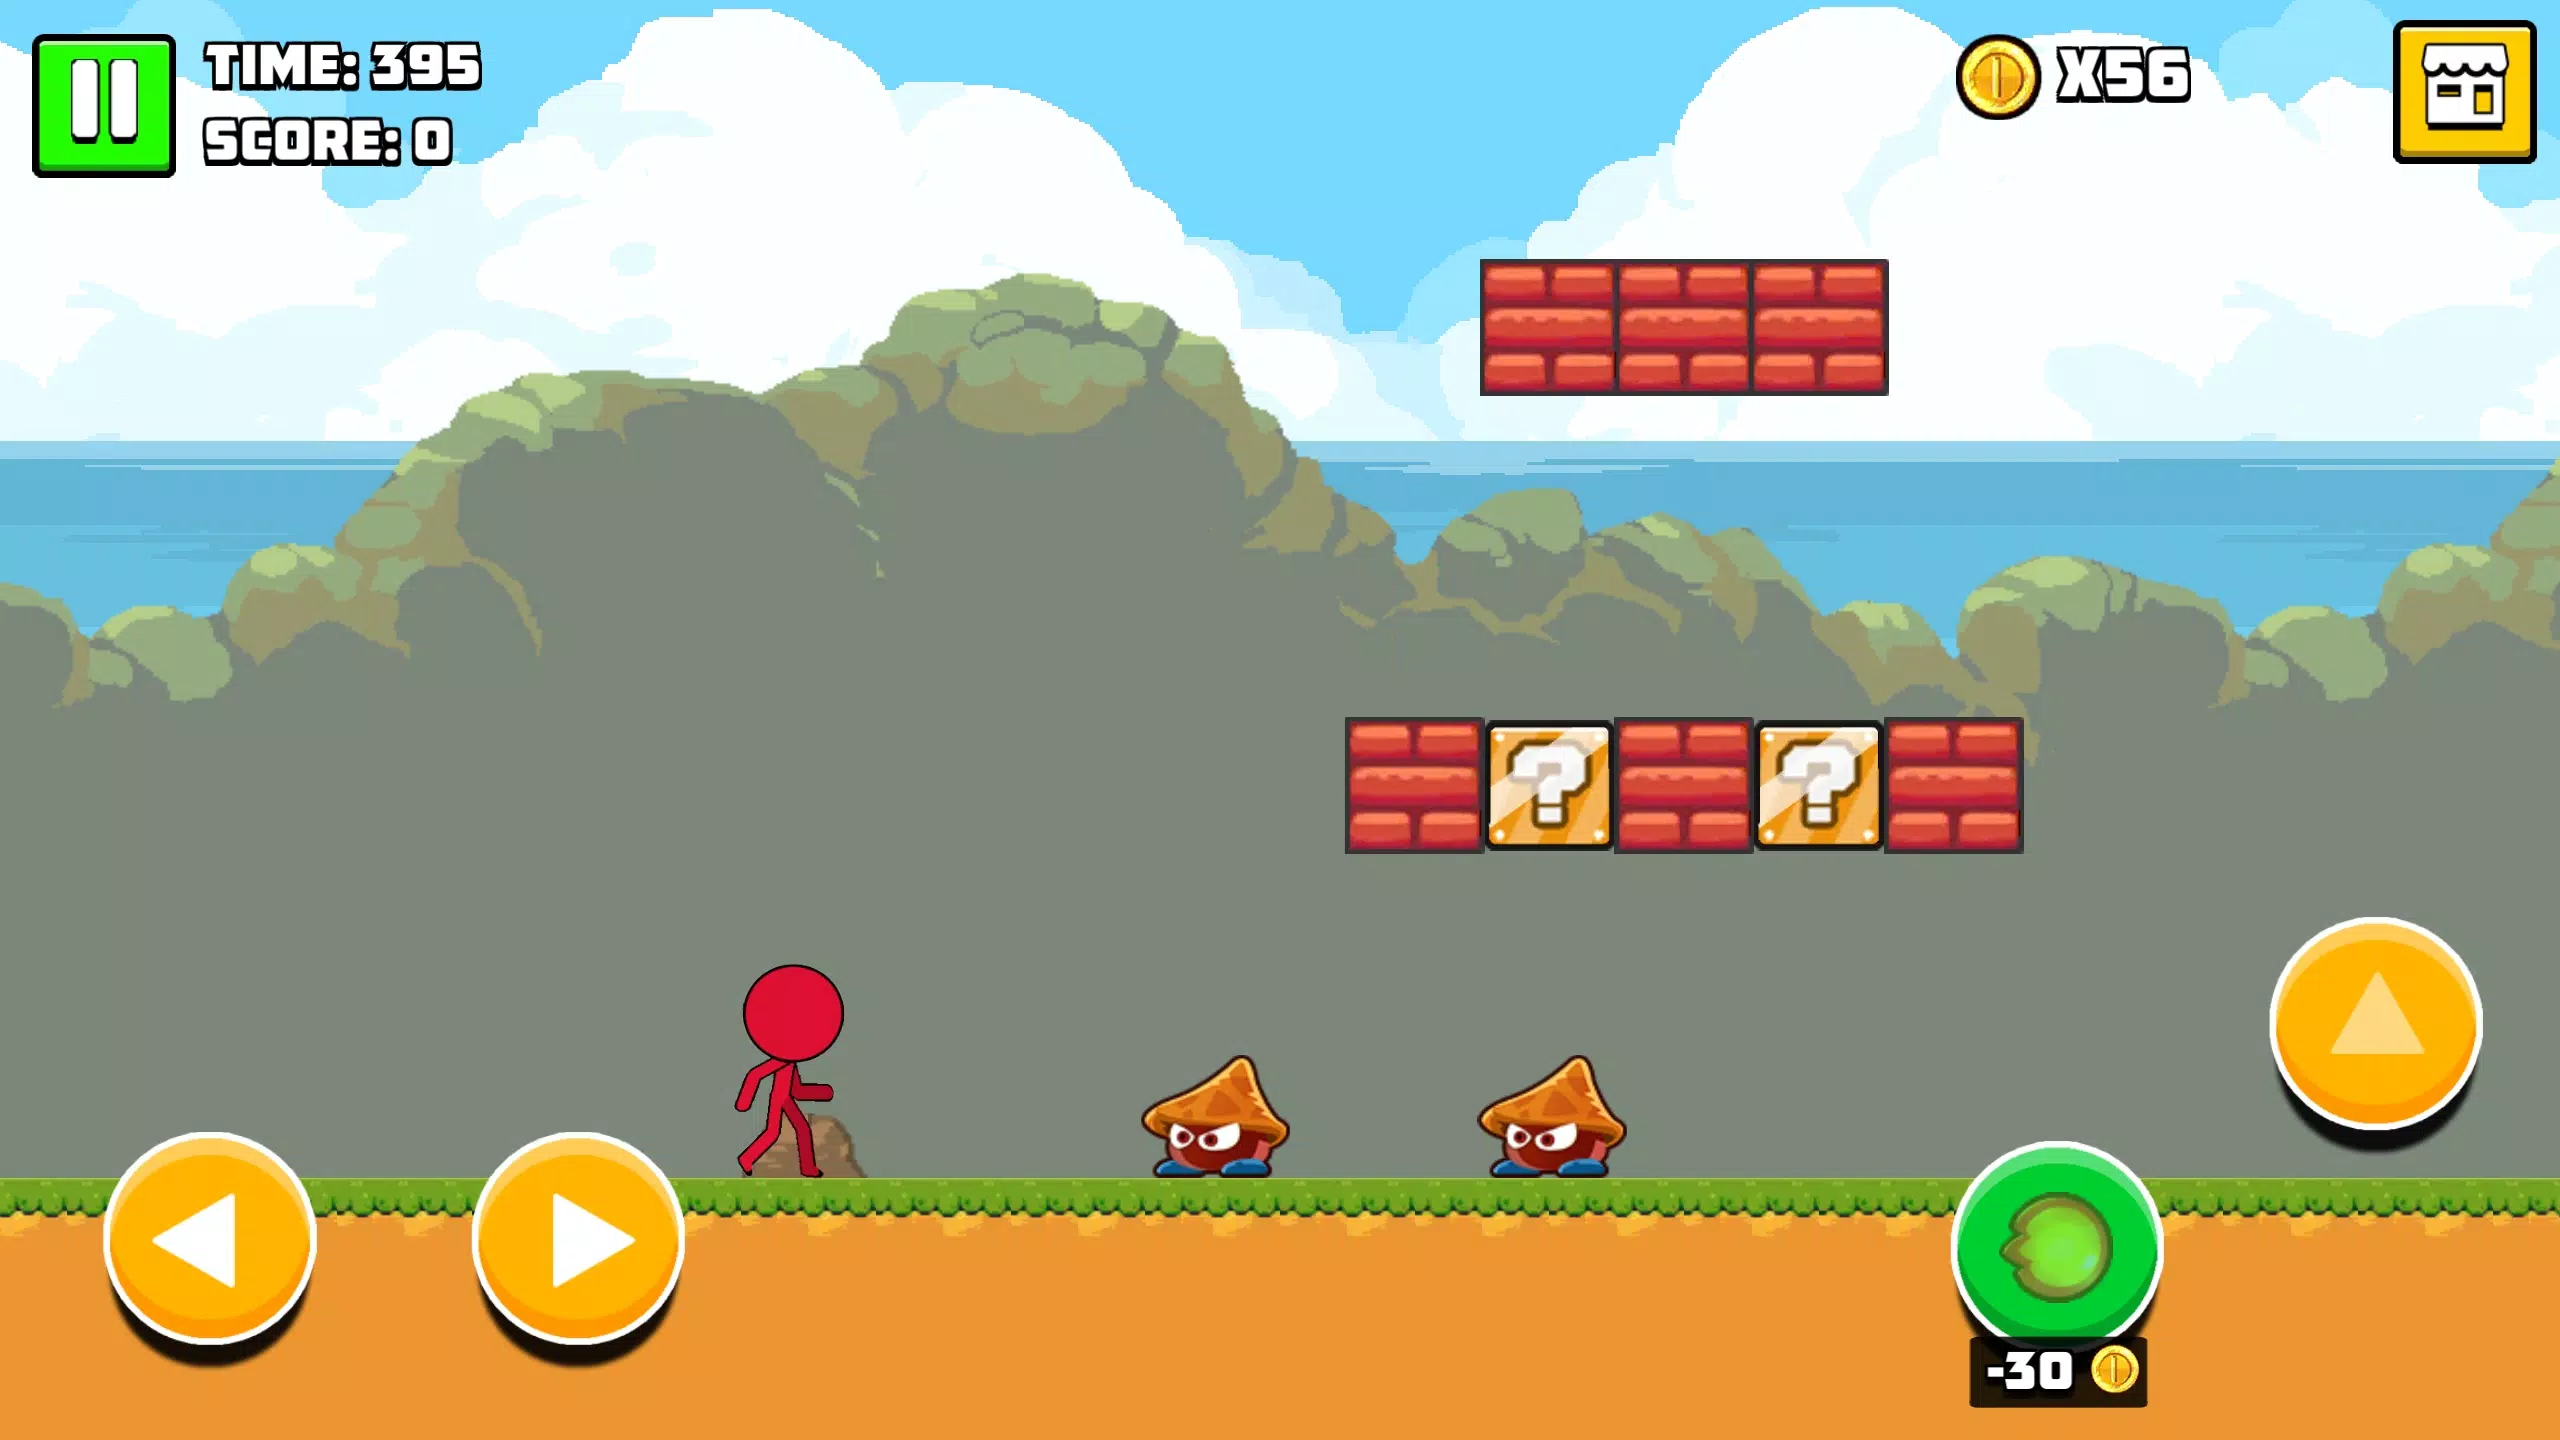 Red Stickman: Stick Adventure – Apps on Google Play